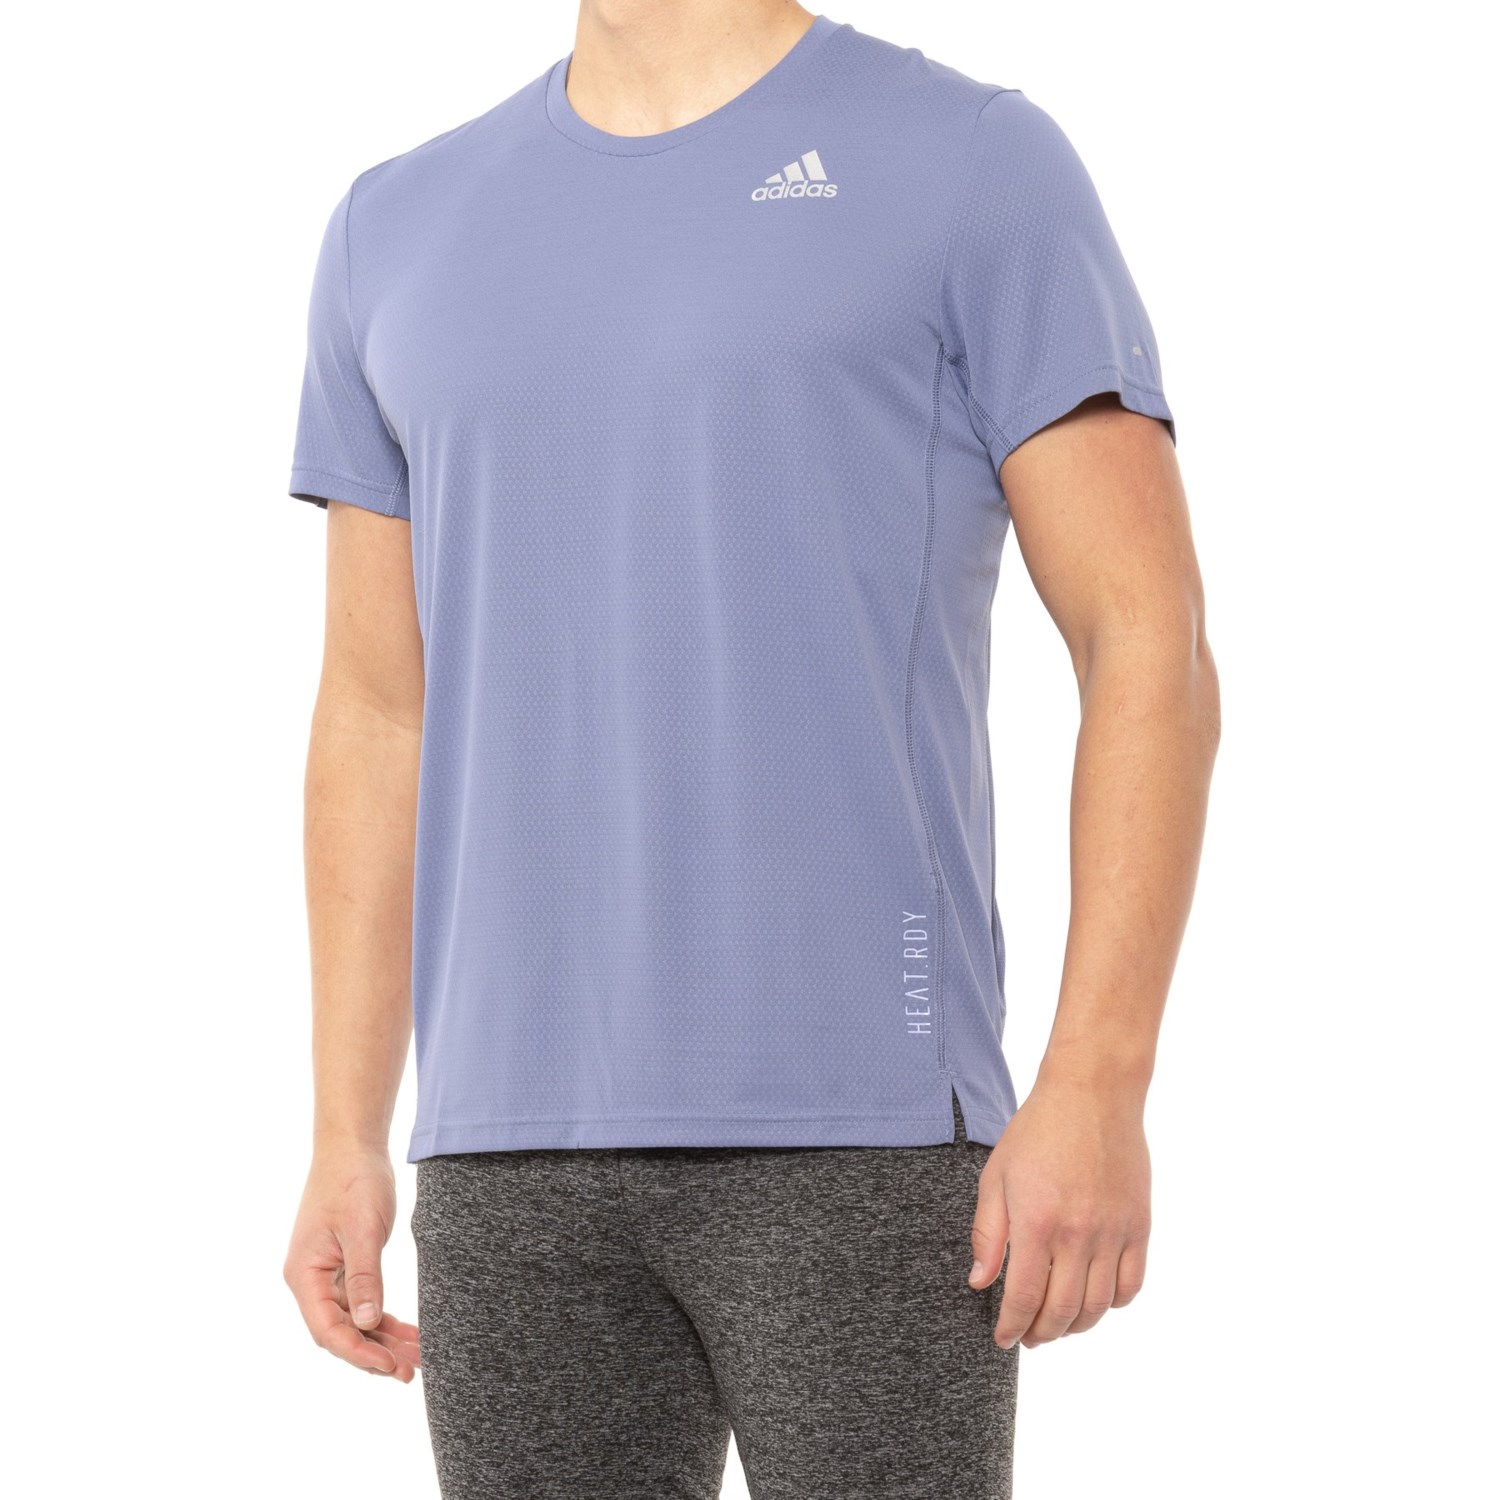 Adidas HEAT.RDY T-Shirt - Short Sleeve (For Men)